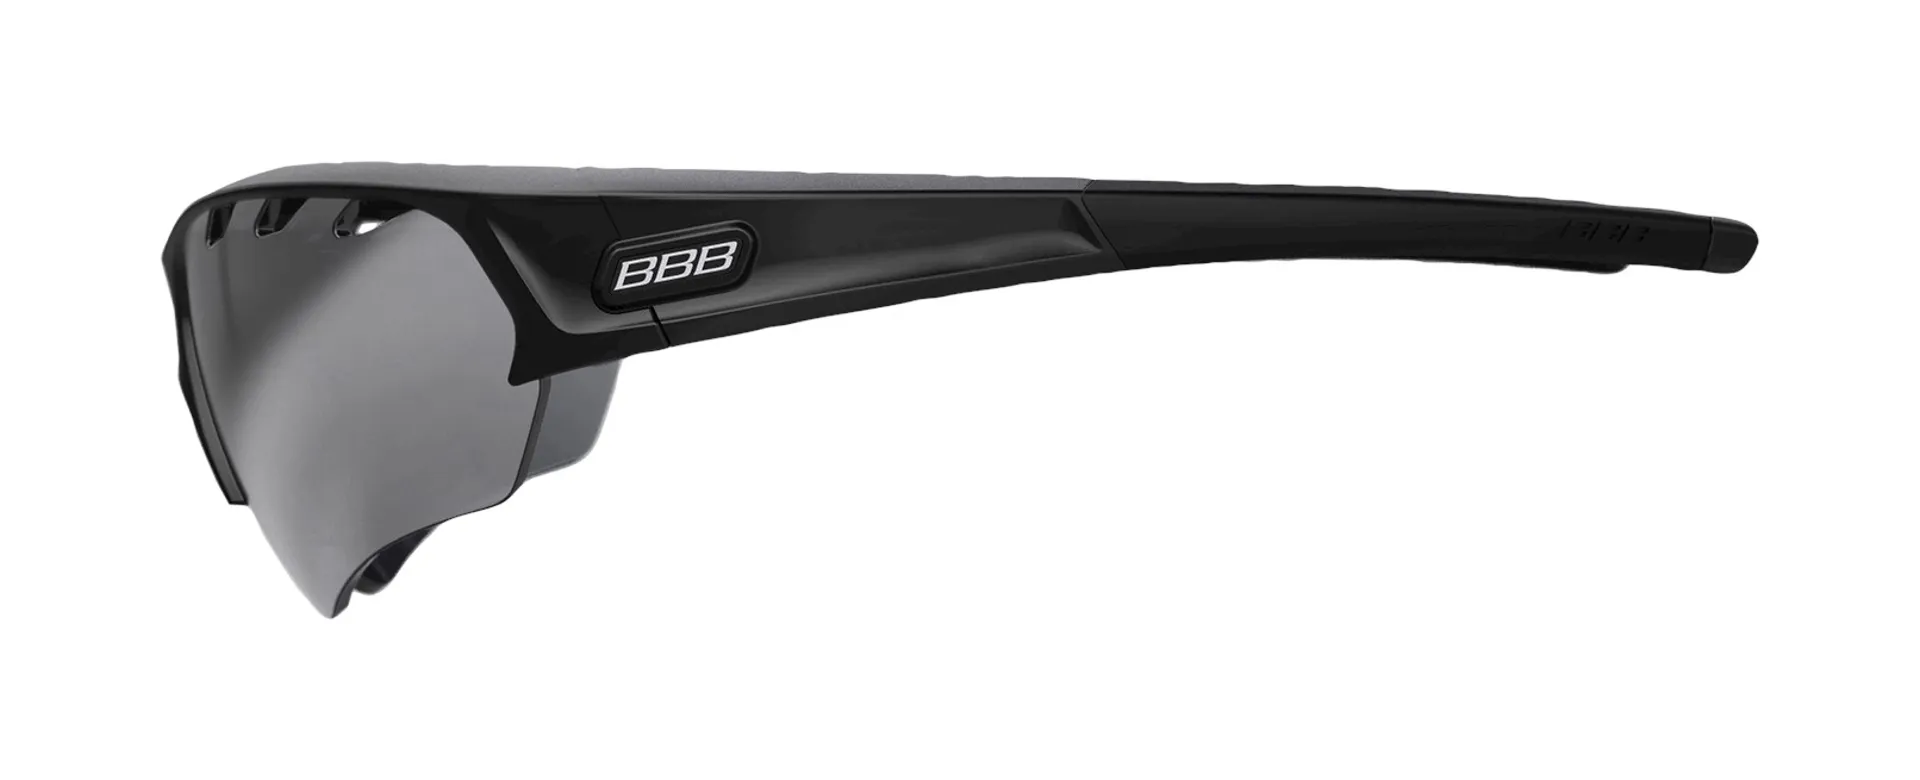 BBB Select Optic Cycle Sport Glasses Black Black Tip Smoke Lens BSG-51